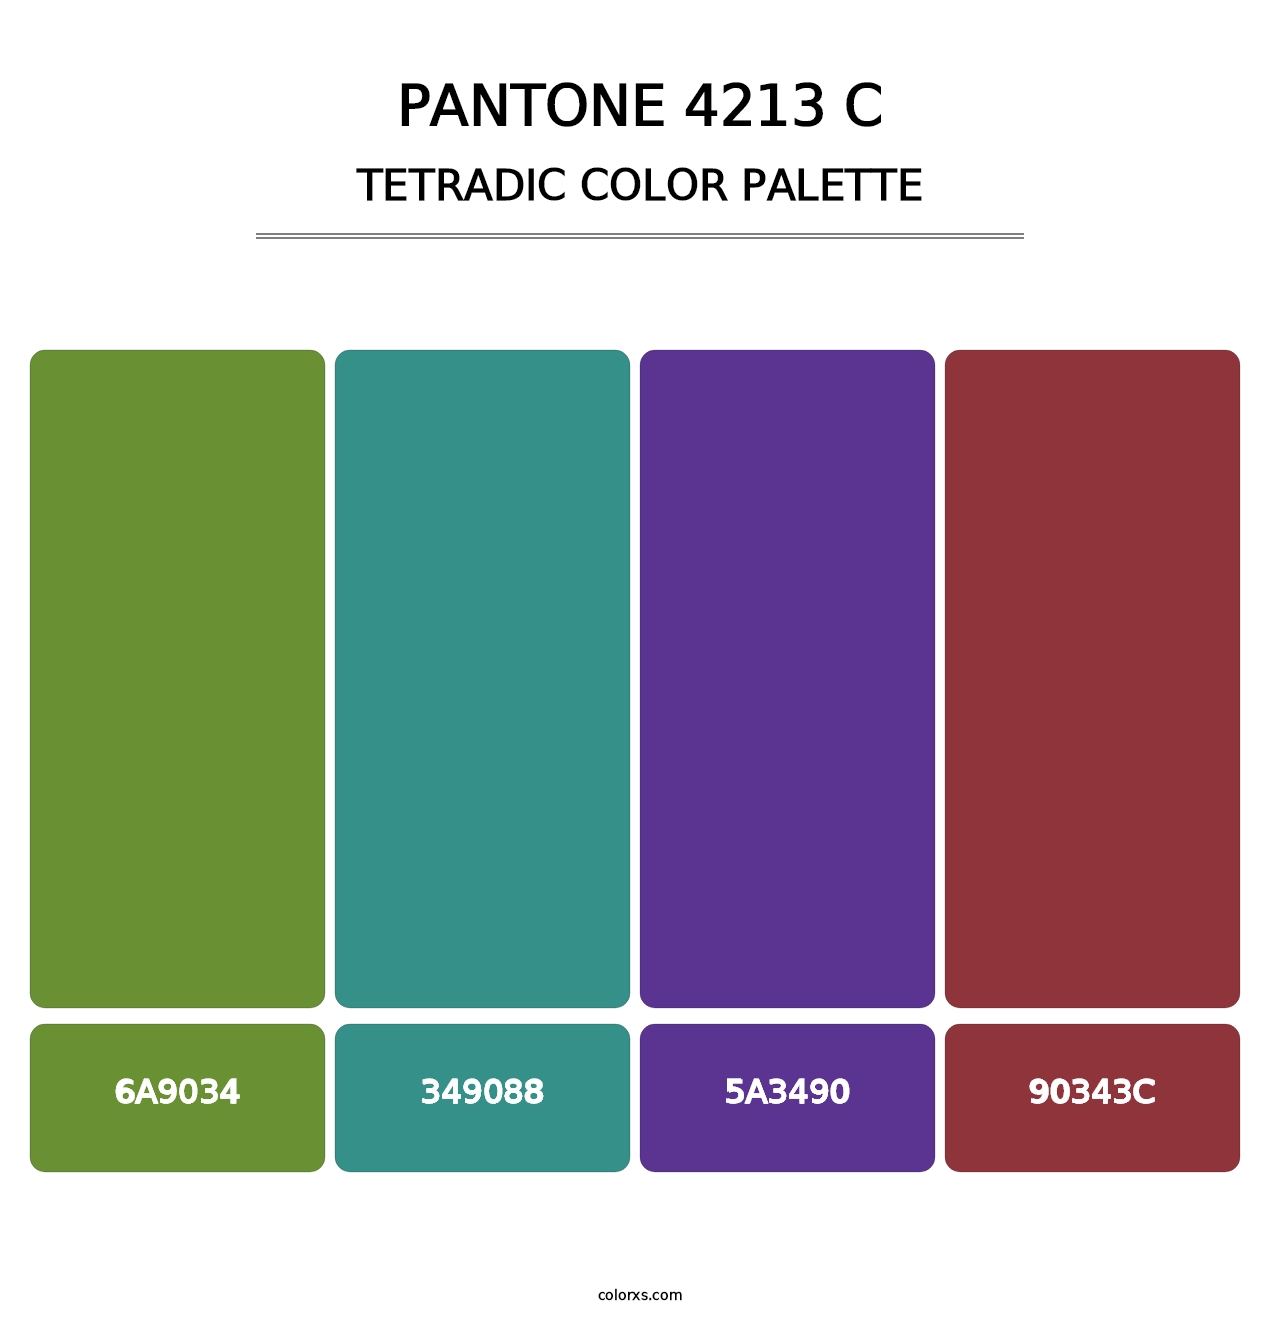 PANTONE 4213 C - Tetradic Color Palette